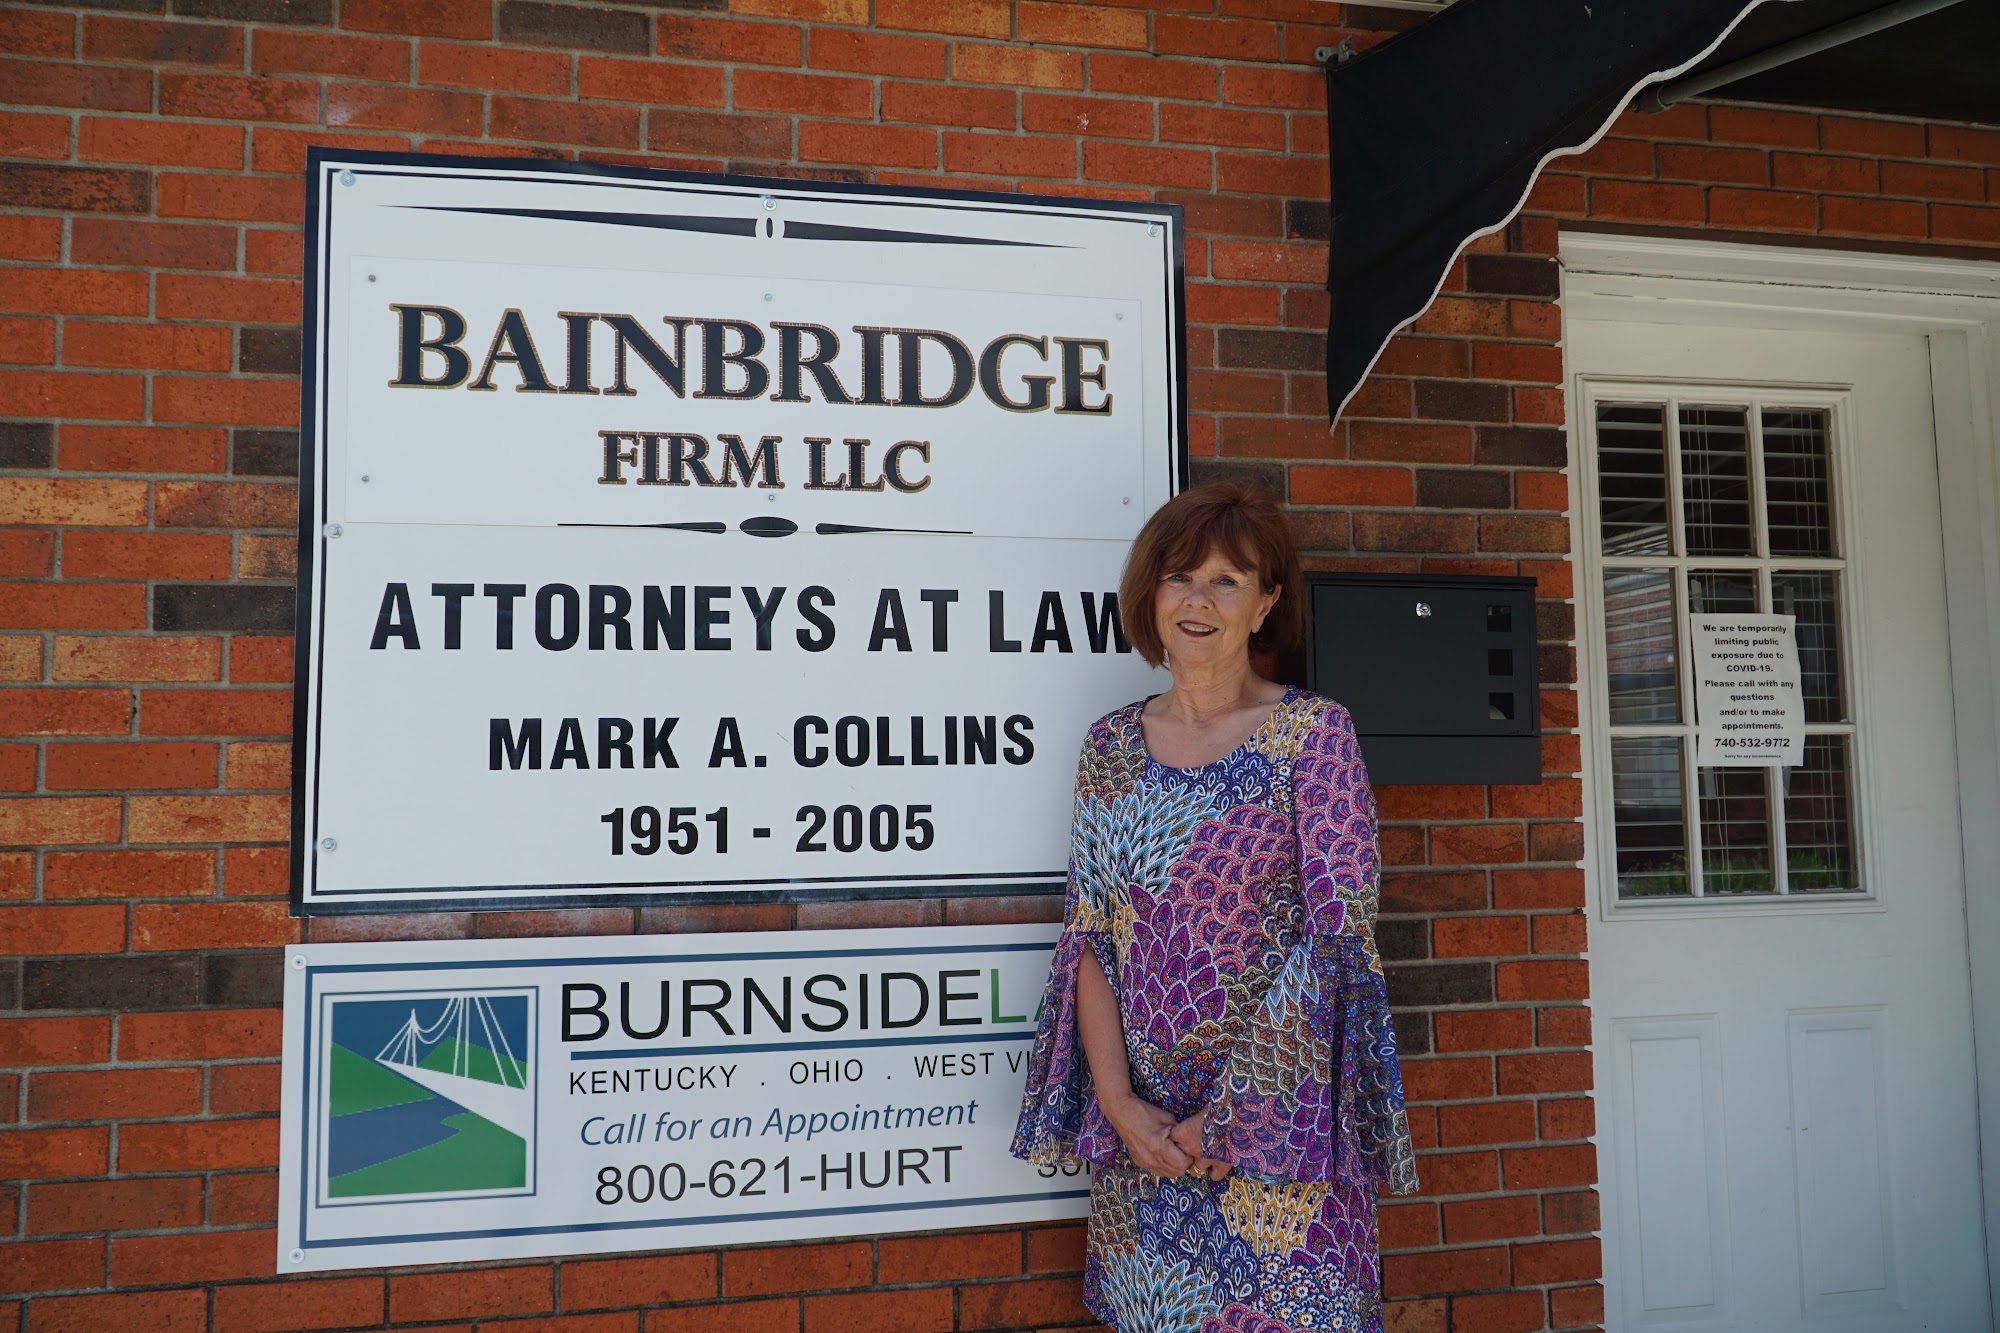 The Bainbridge Firm, LLC 119 N 5th St, Ironton Ohio 45638